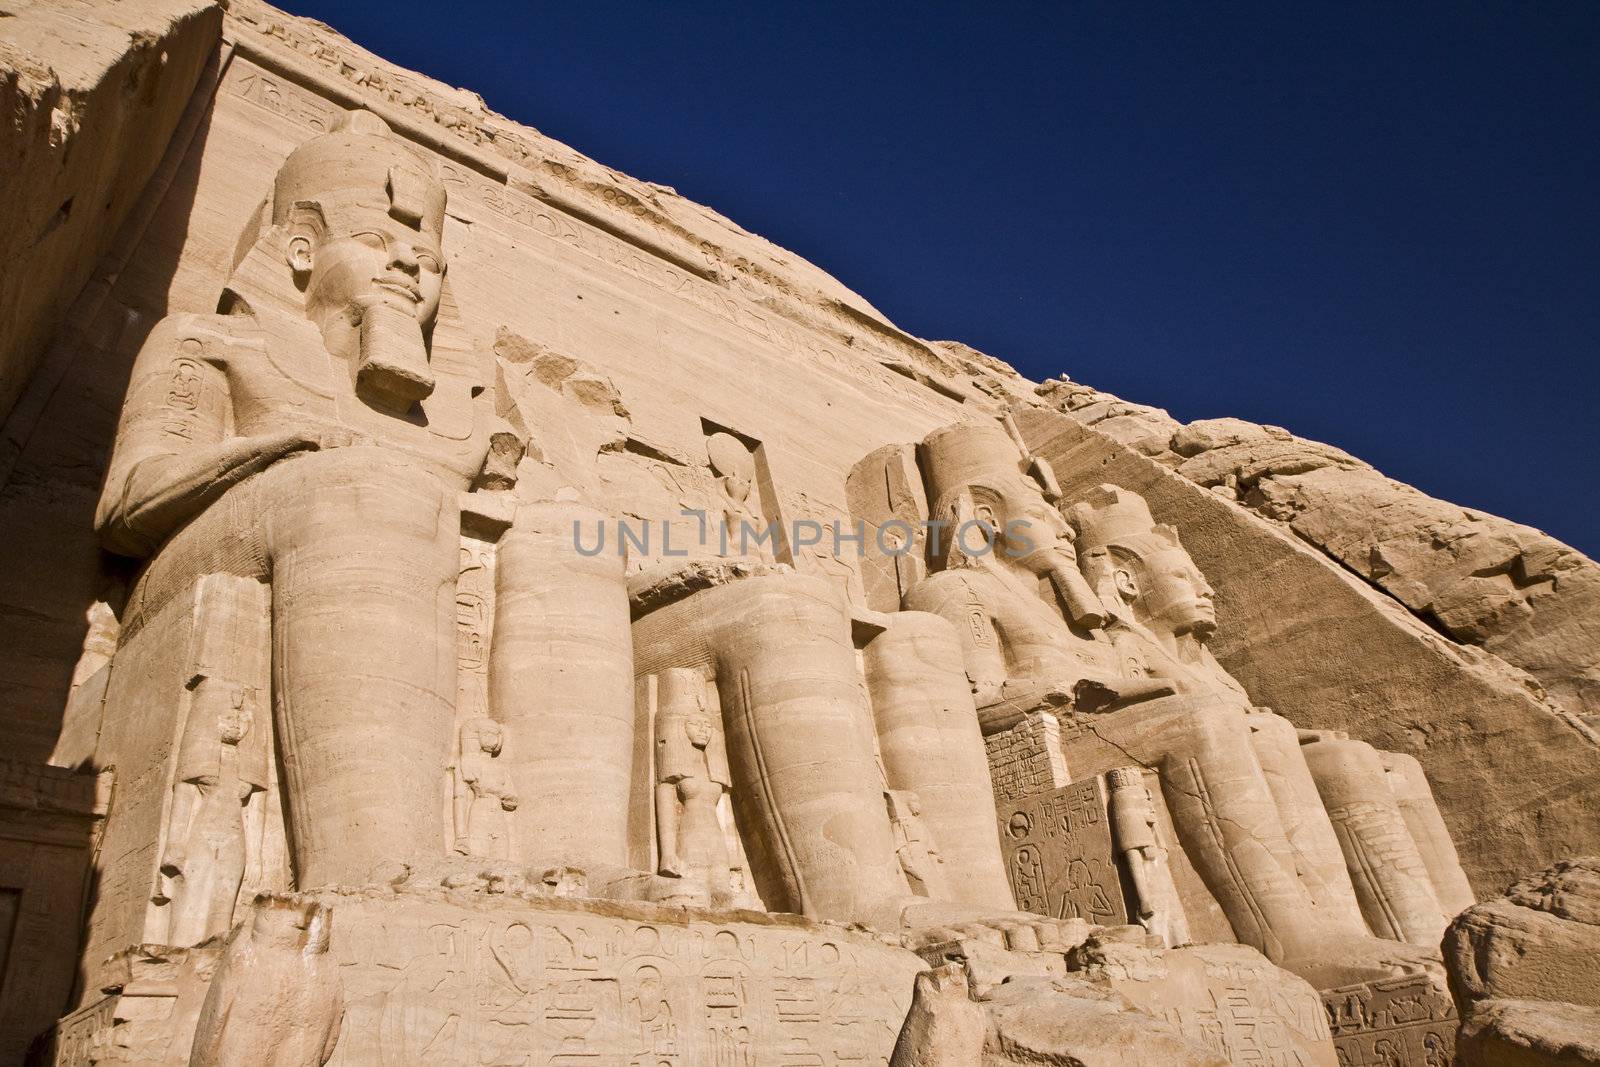 Stone statues in Egypt by Gbuglok